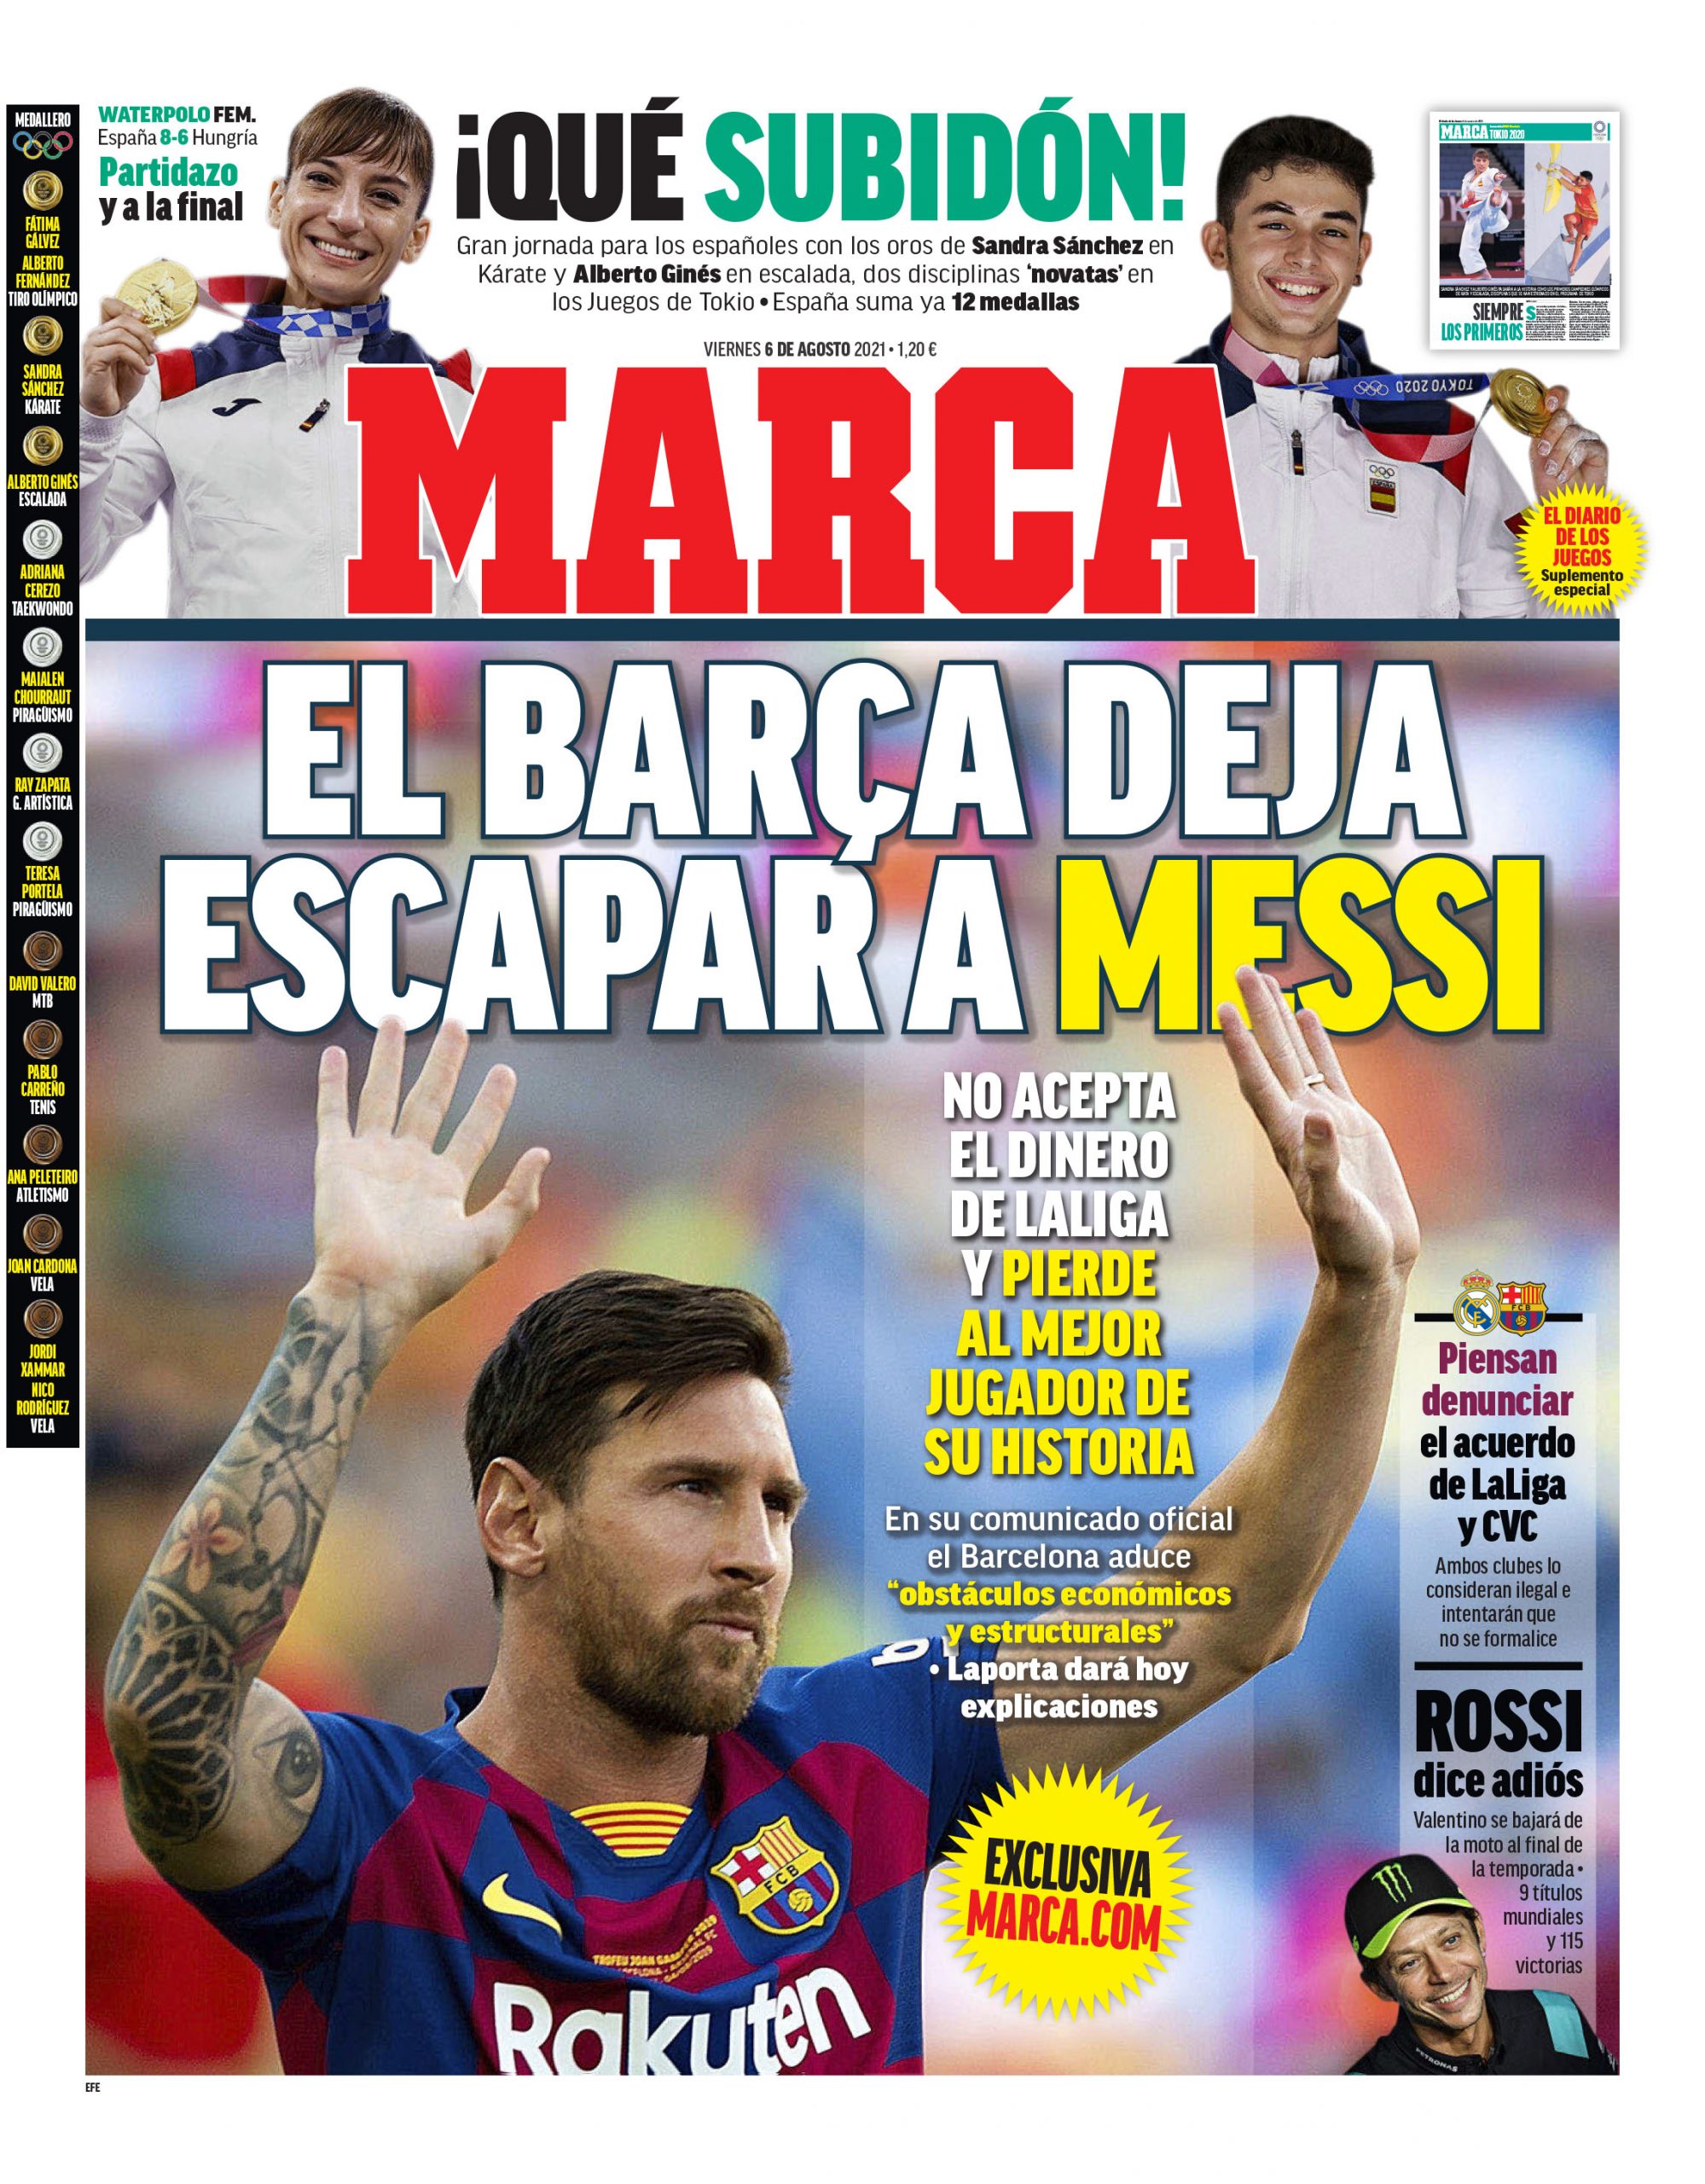 Messi portadas medios Barcelona